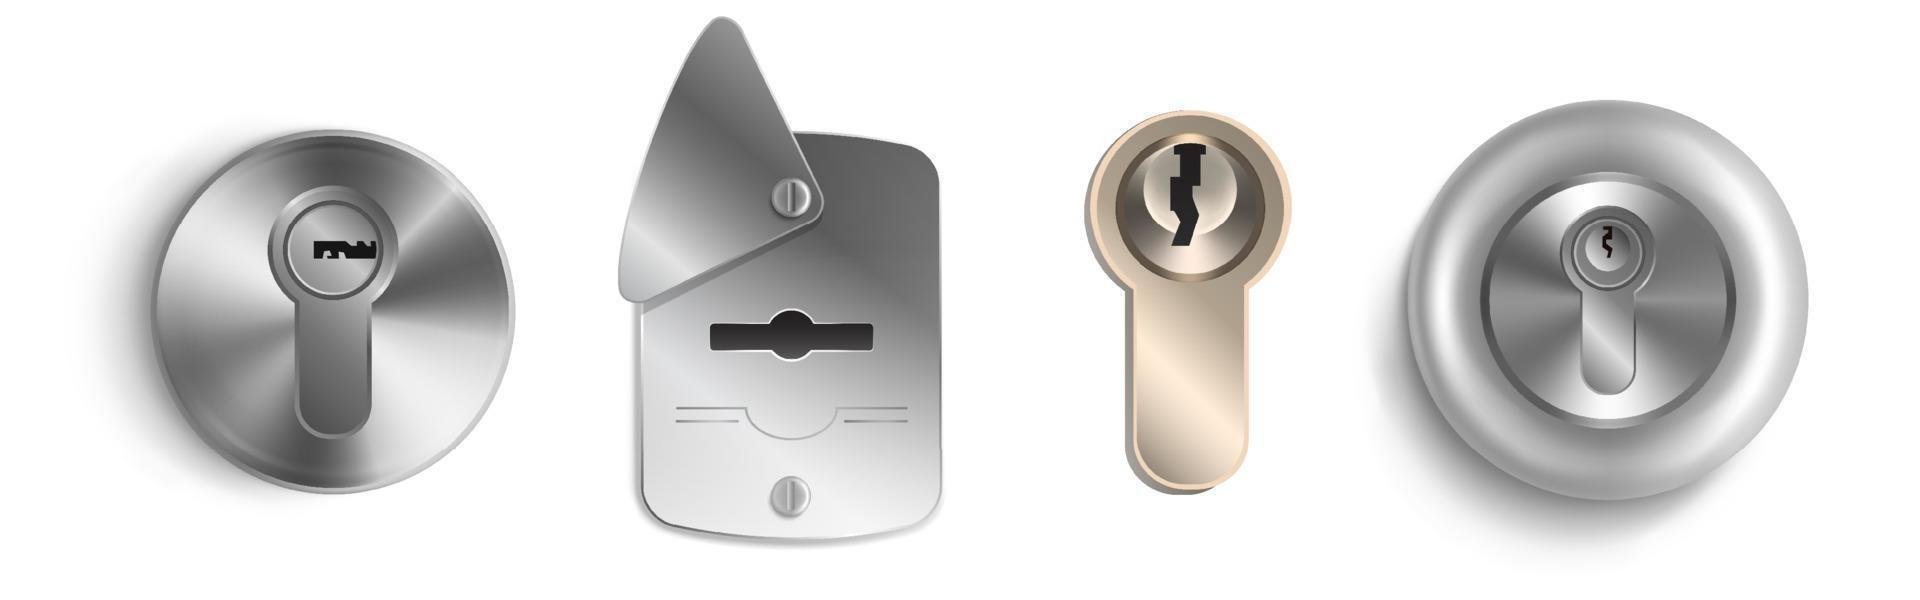 Keyhole templates, round and rectangular key holes vector